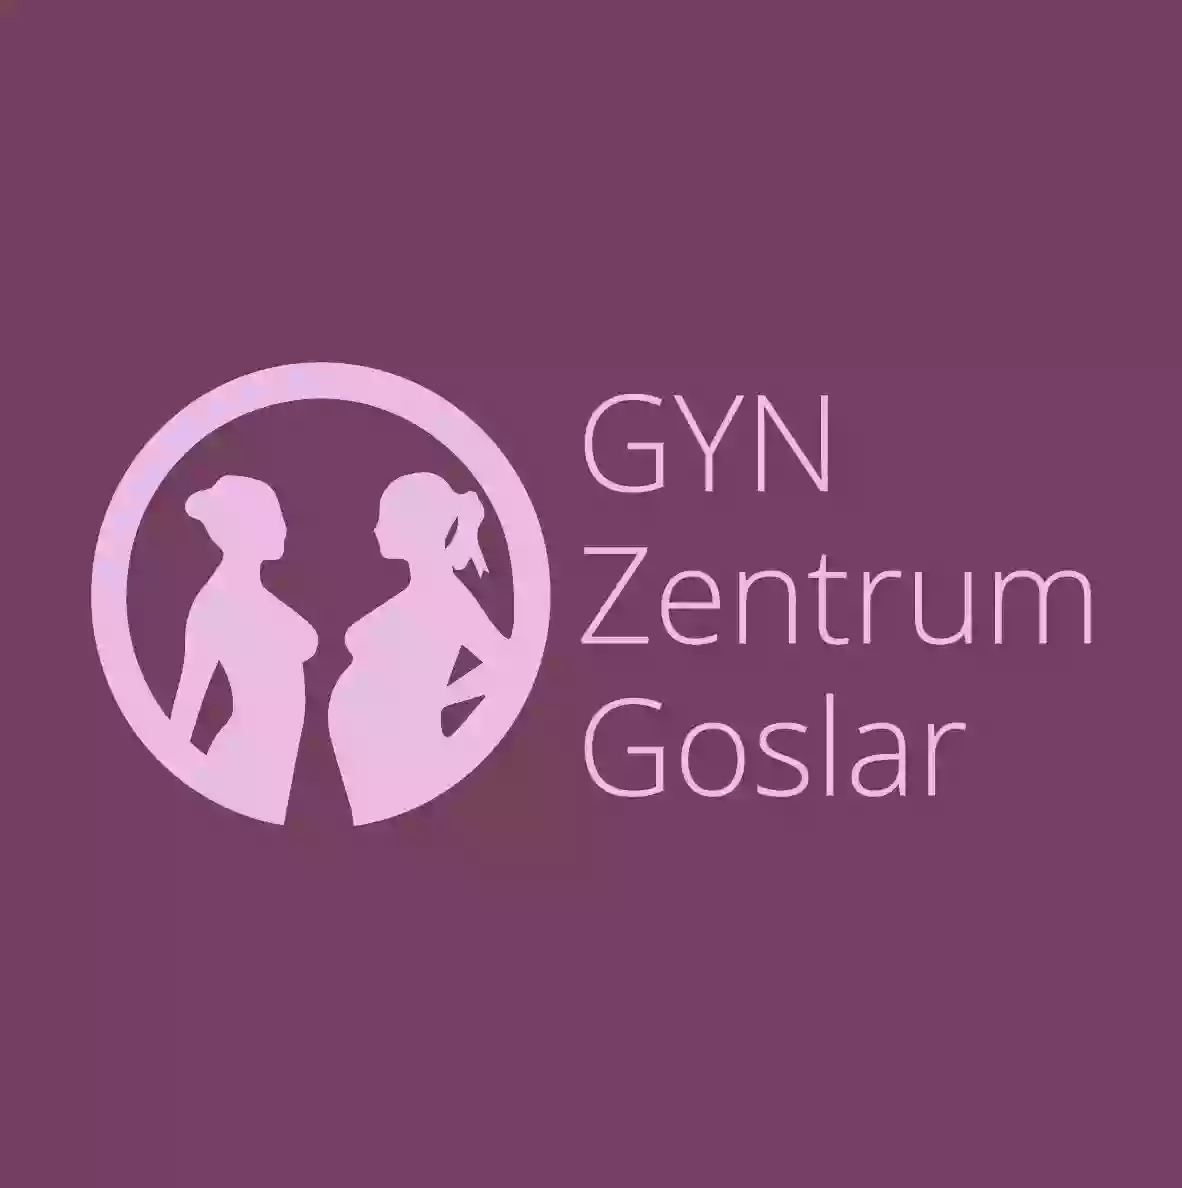 Gyn-Zentrum-Goslar Praxisgemeinschaft Dr. K. Mühlhäusler, Dr. M. Hötzeldt, M.Klose